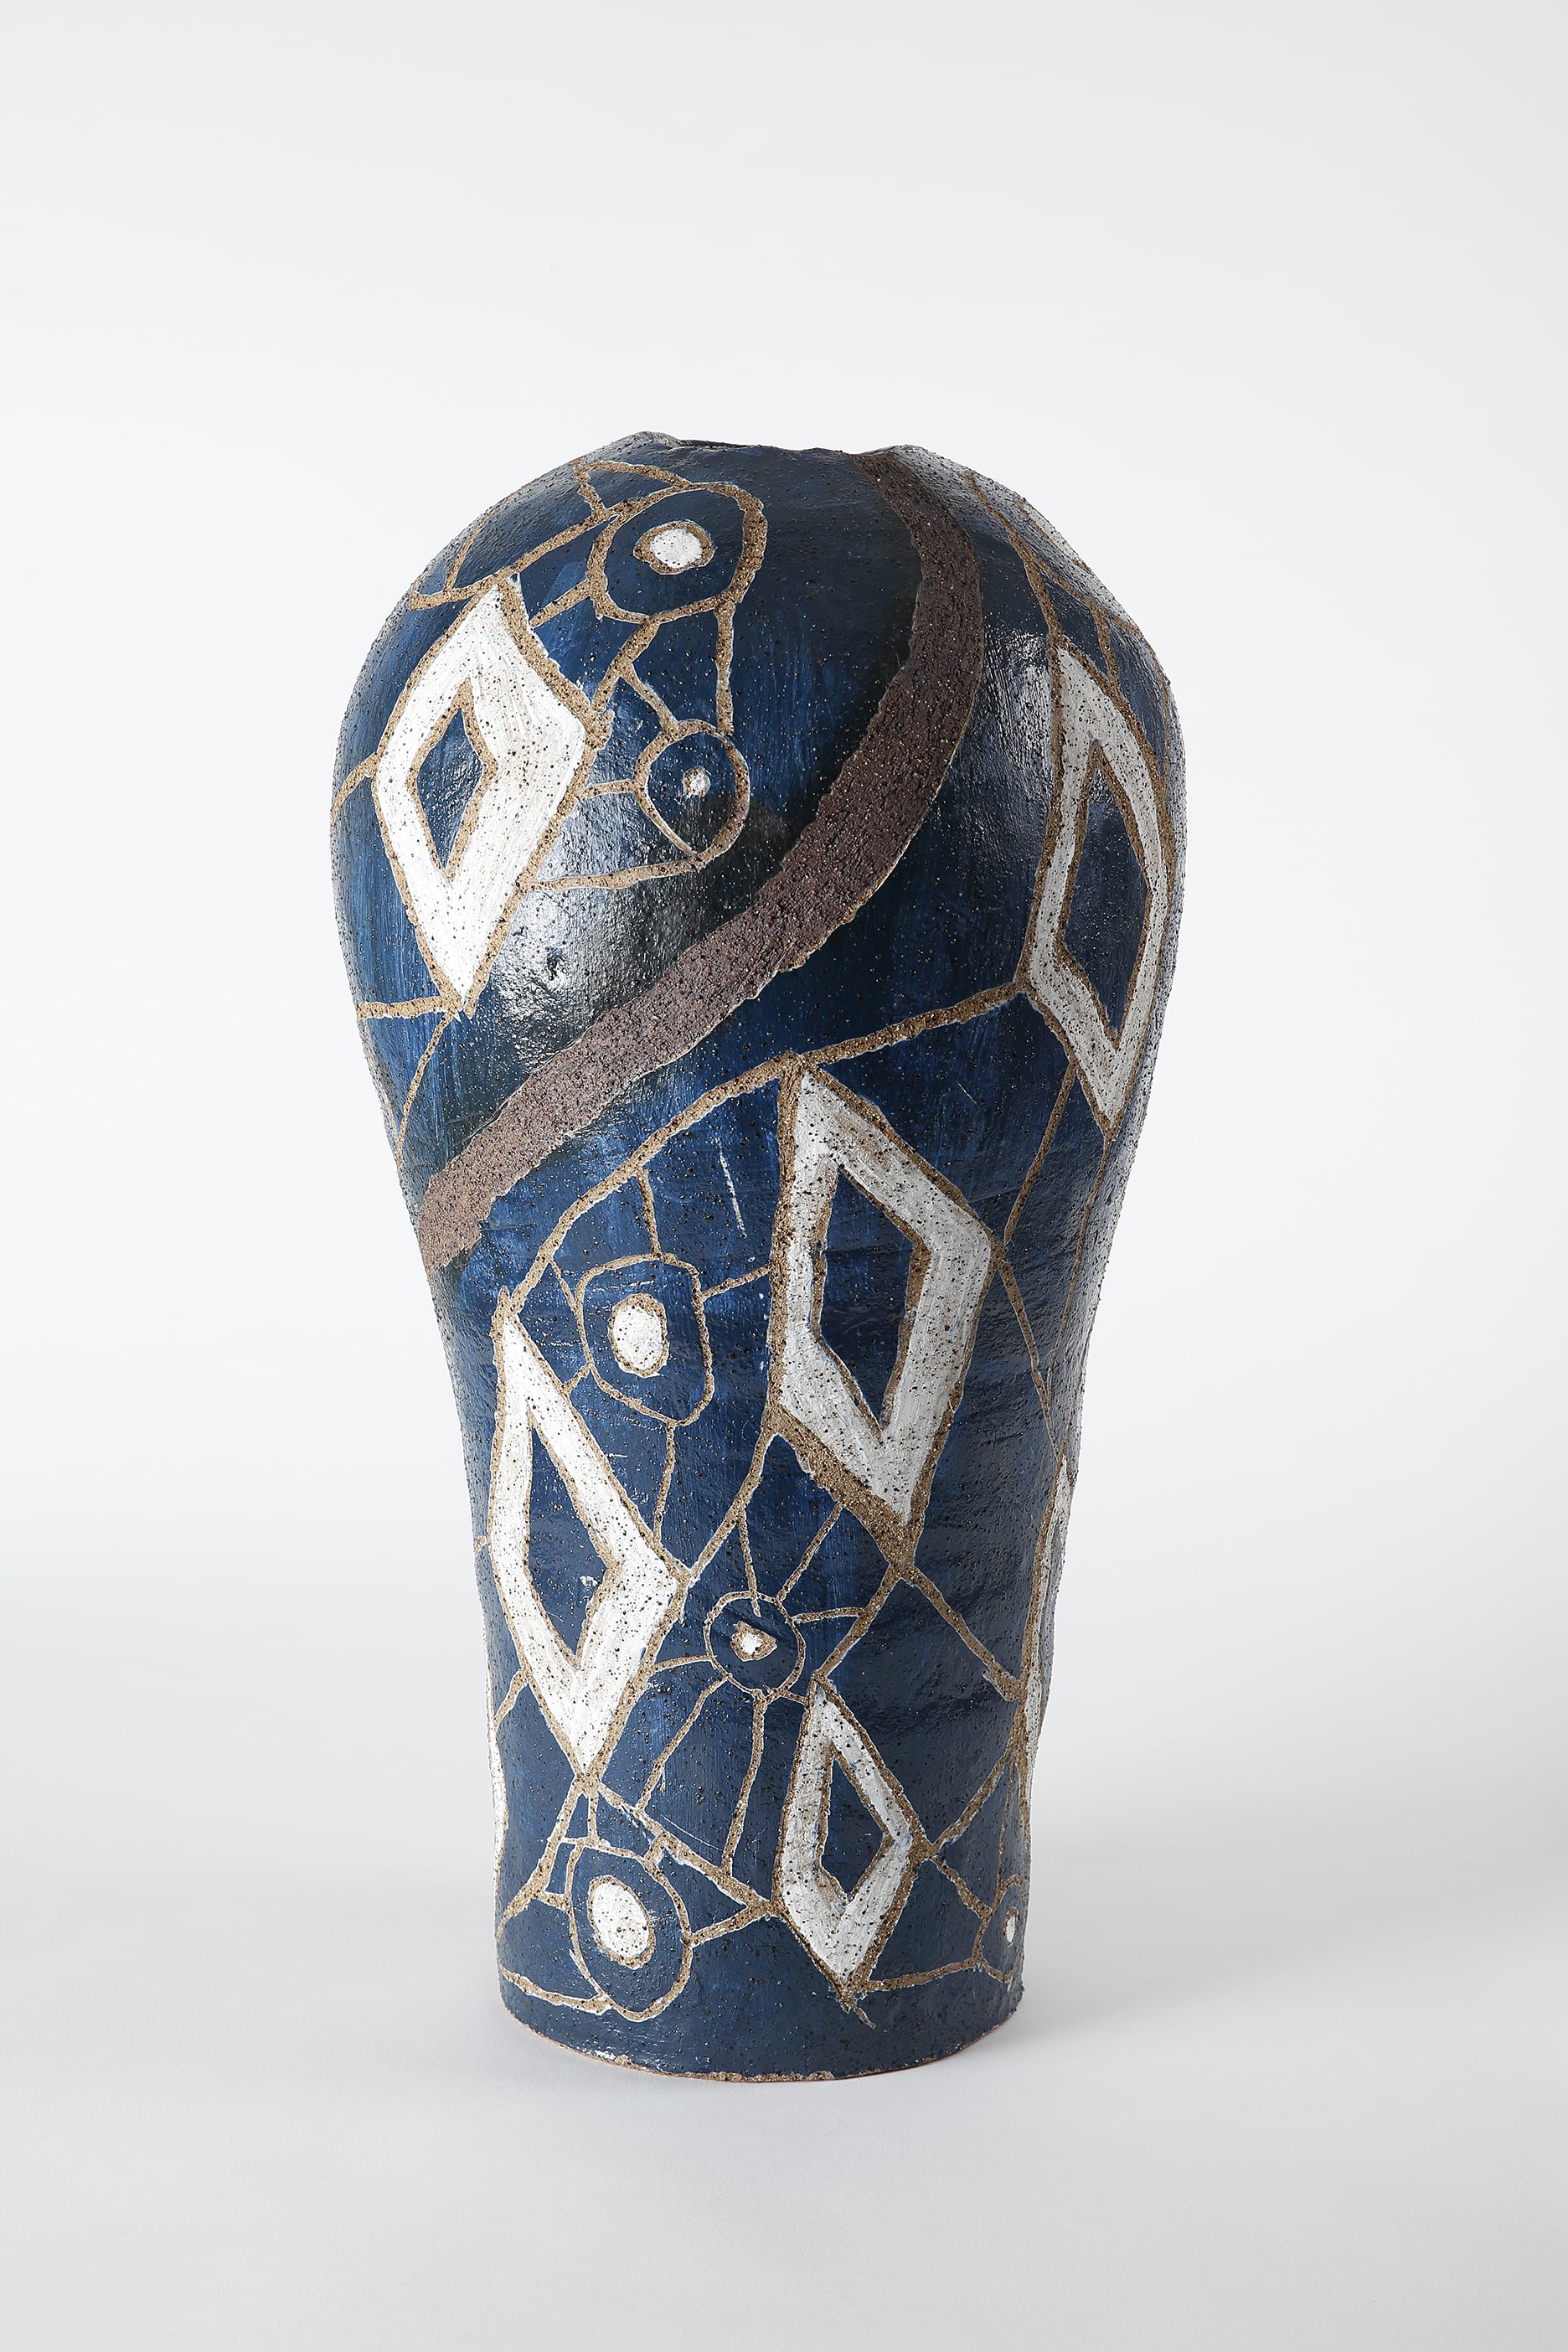 Pepai Jangala Carroll, Walungurru, 2018, stoneware, 58 (h)x 30 cm. Photo: Fiona Morrison.